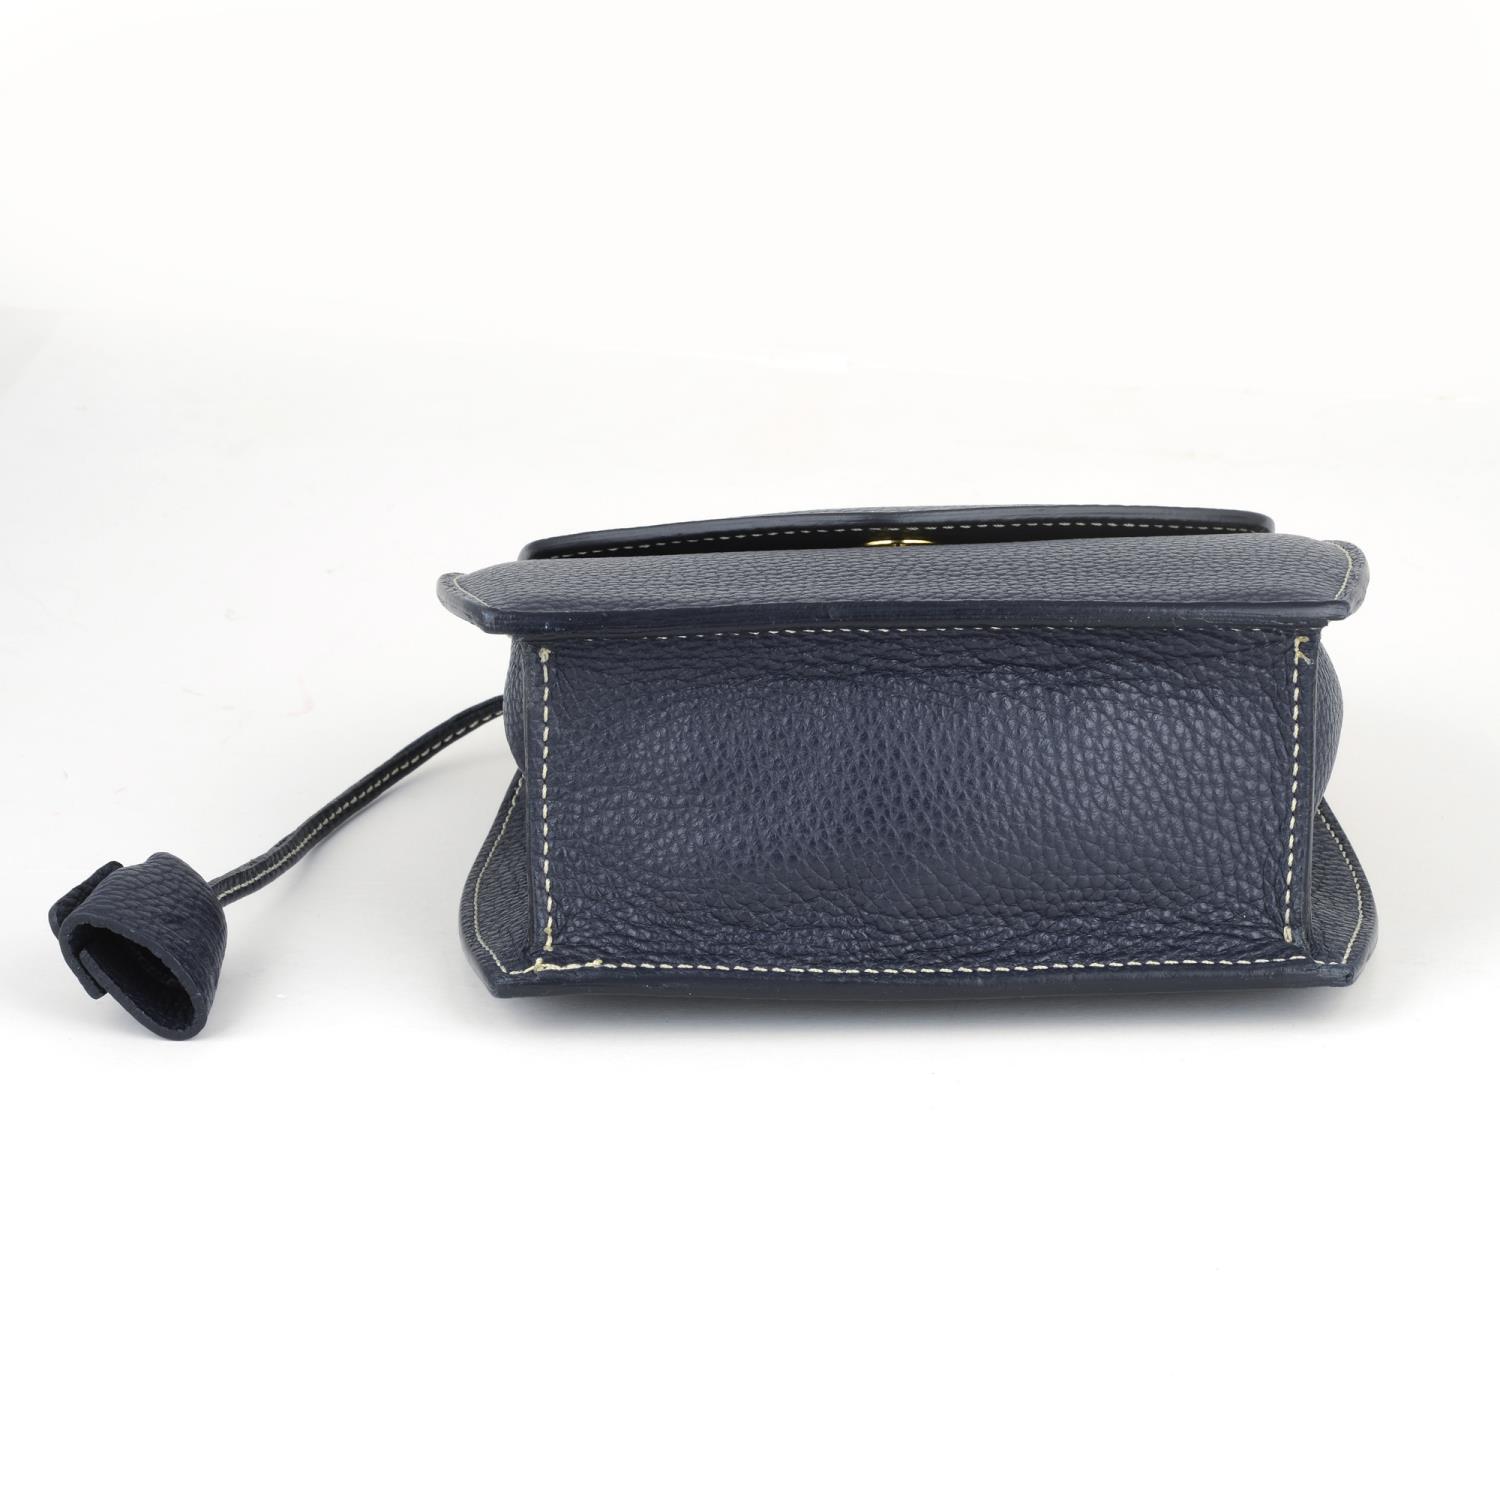 BUTI PELLETTERIE - a mini Minny navy blue leather handbag. - Image 5 of 6